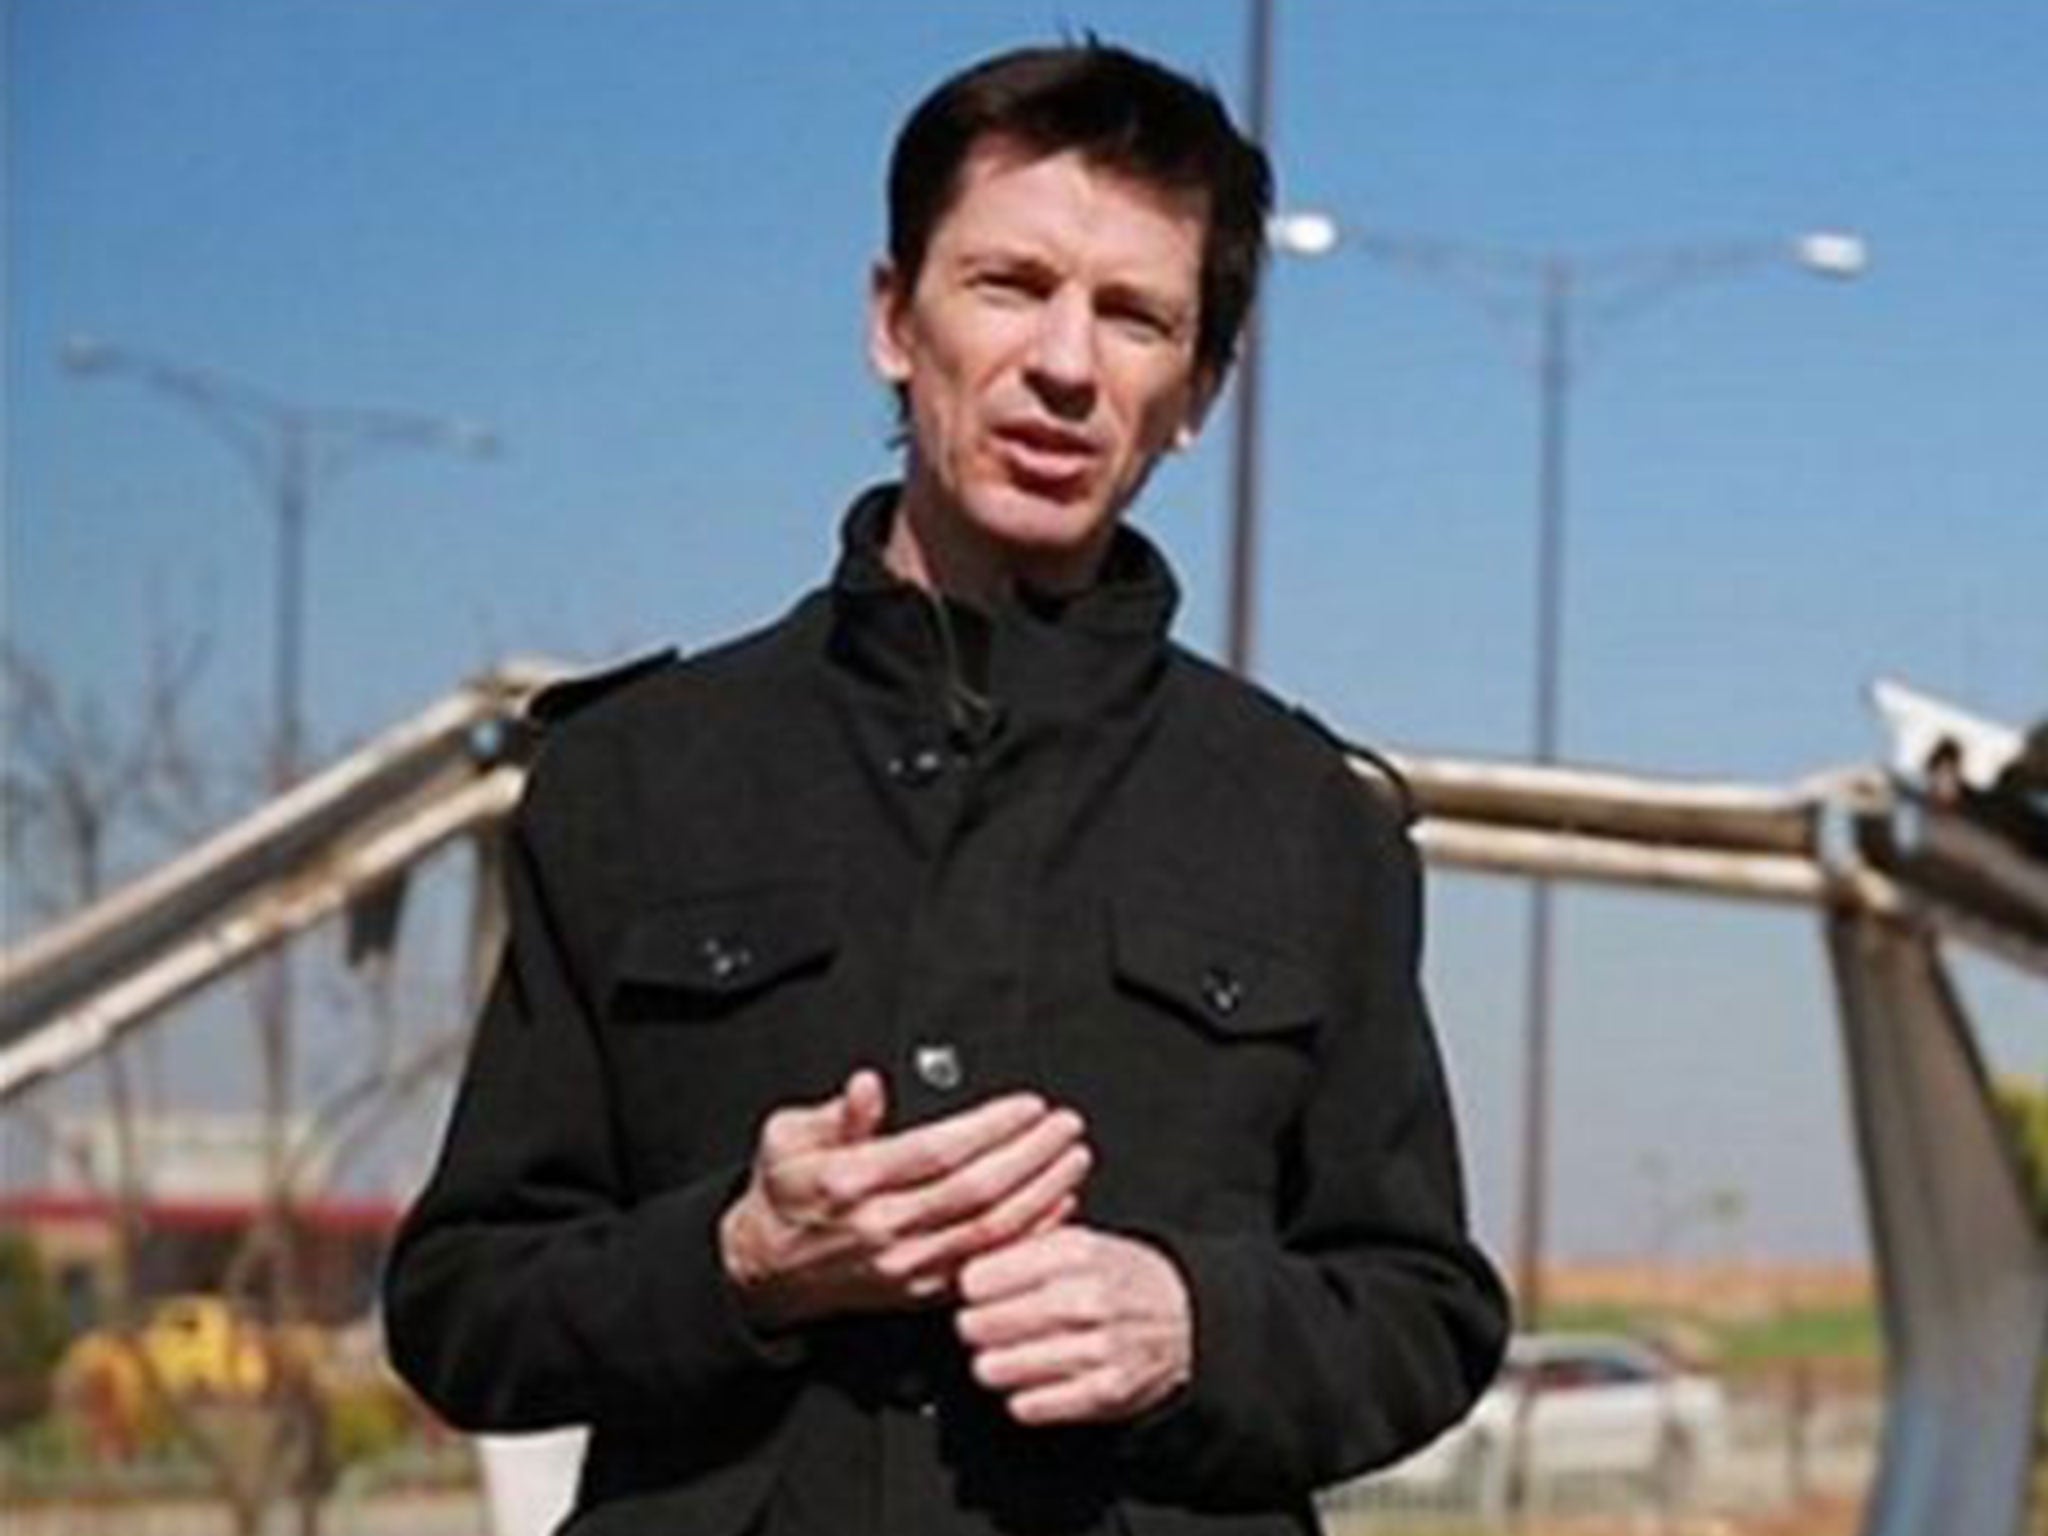 British photojournalist John Cantlie has been coerced into making jihadist propaganda videos